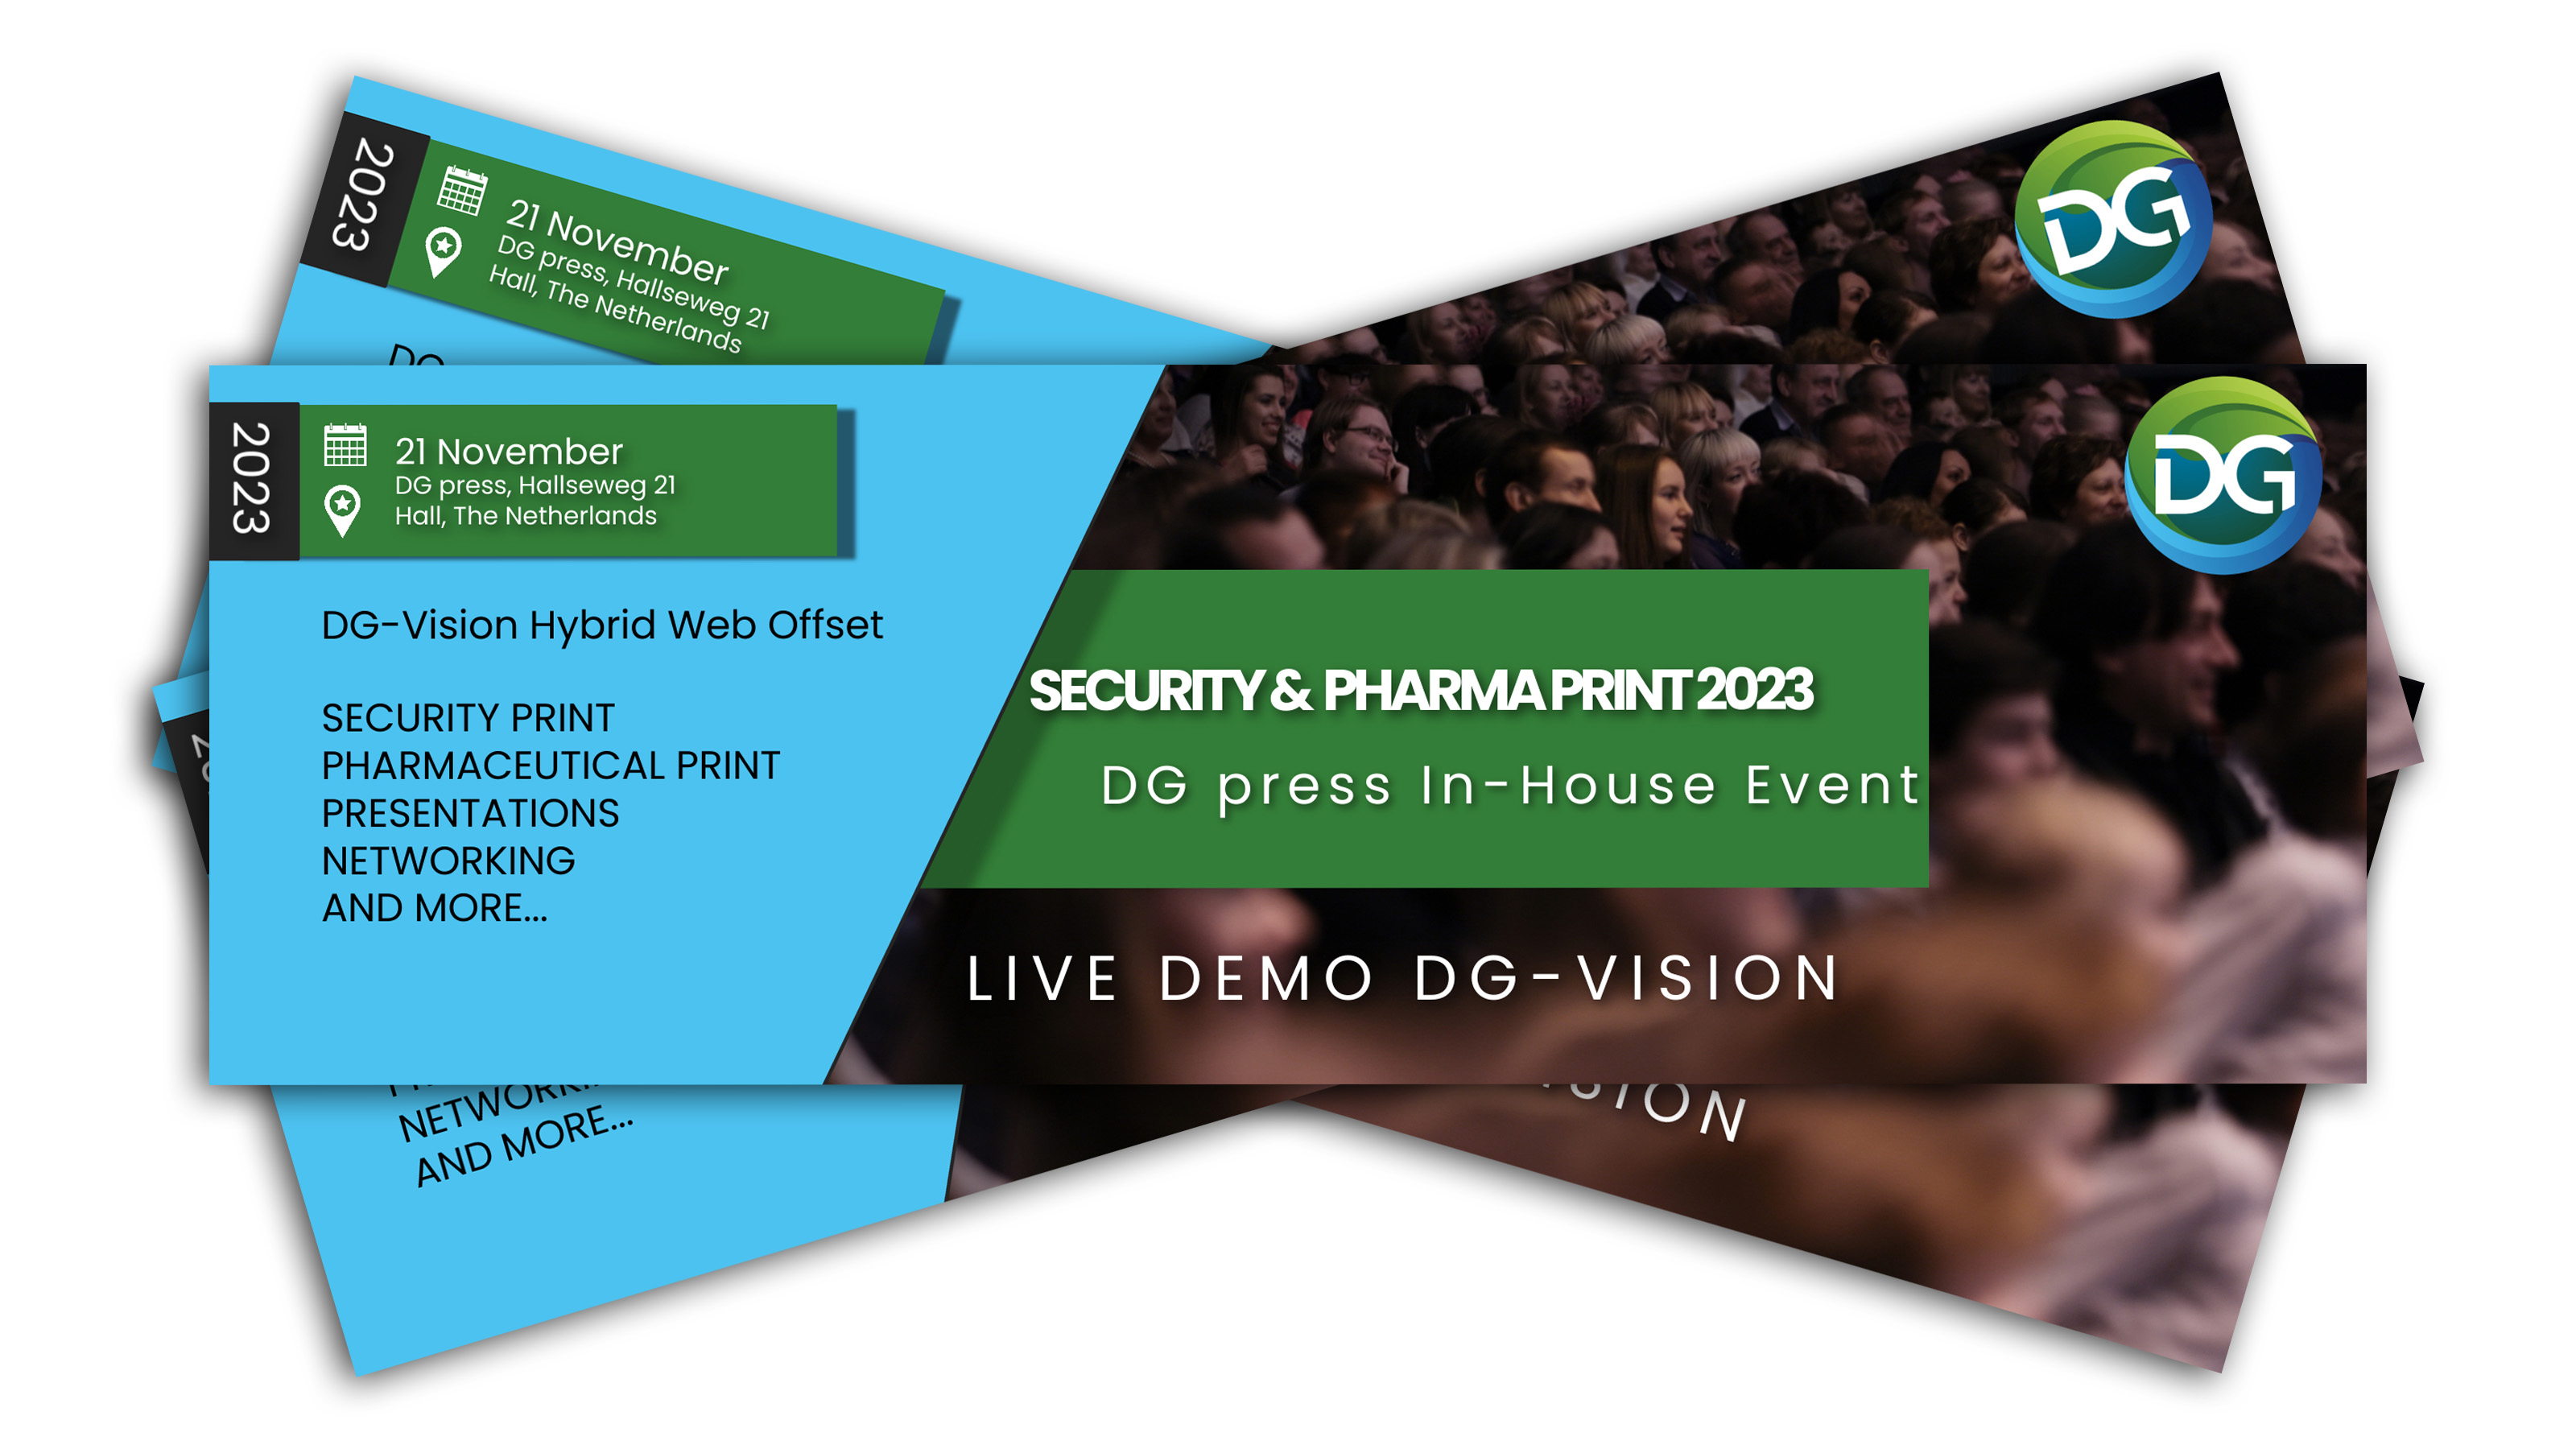 SC DG Press Security & Pharma Print 2023 Montage